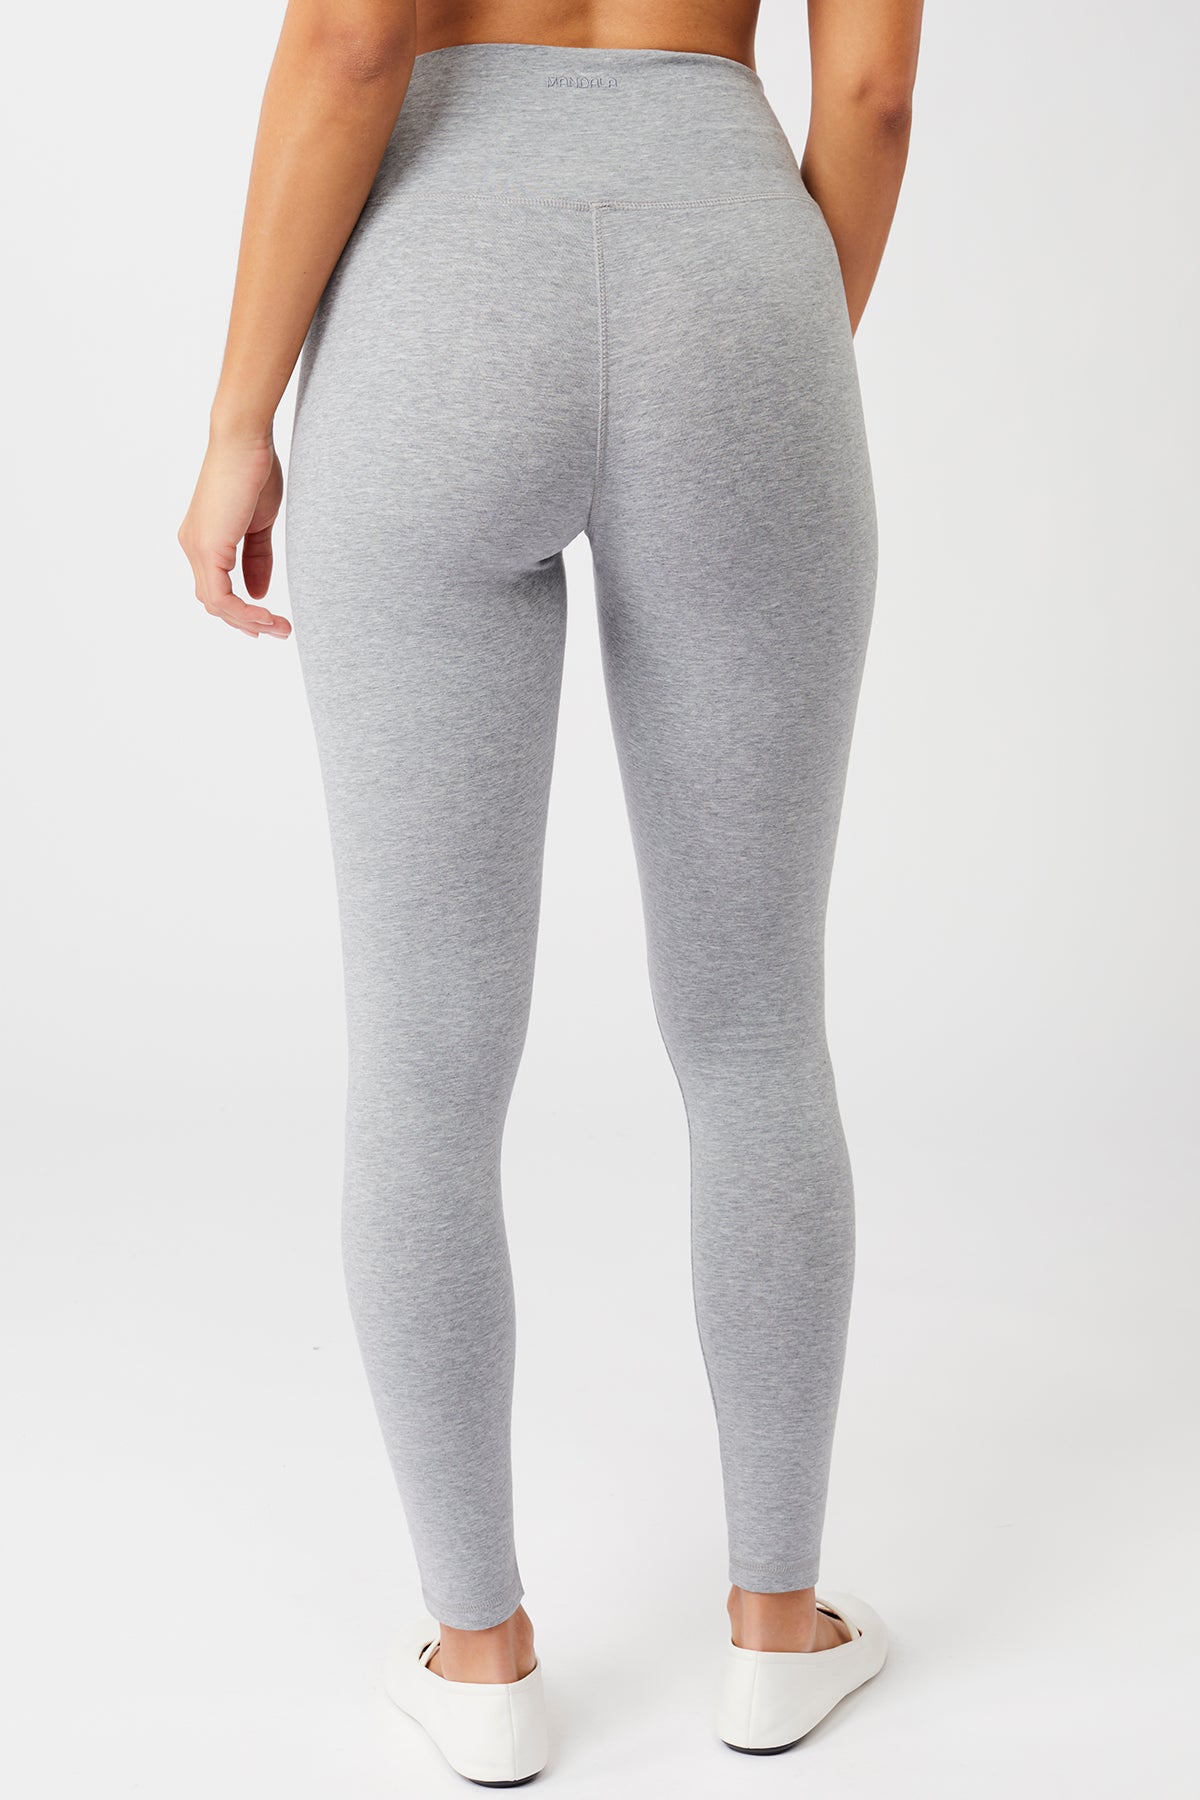 Shop JOCKEY Women's Tencel Lyocell Relaxed Fit Yoga Pants. – INEZY